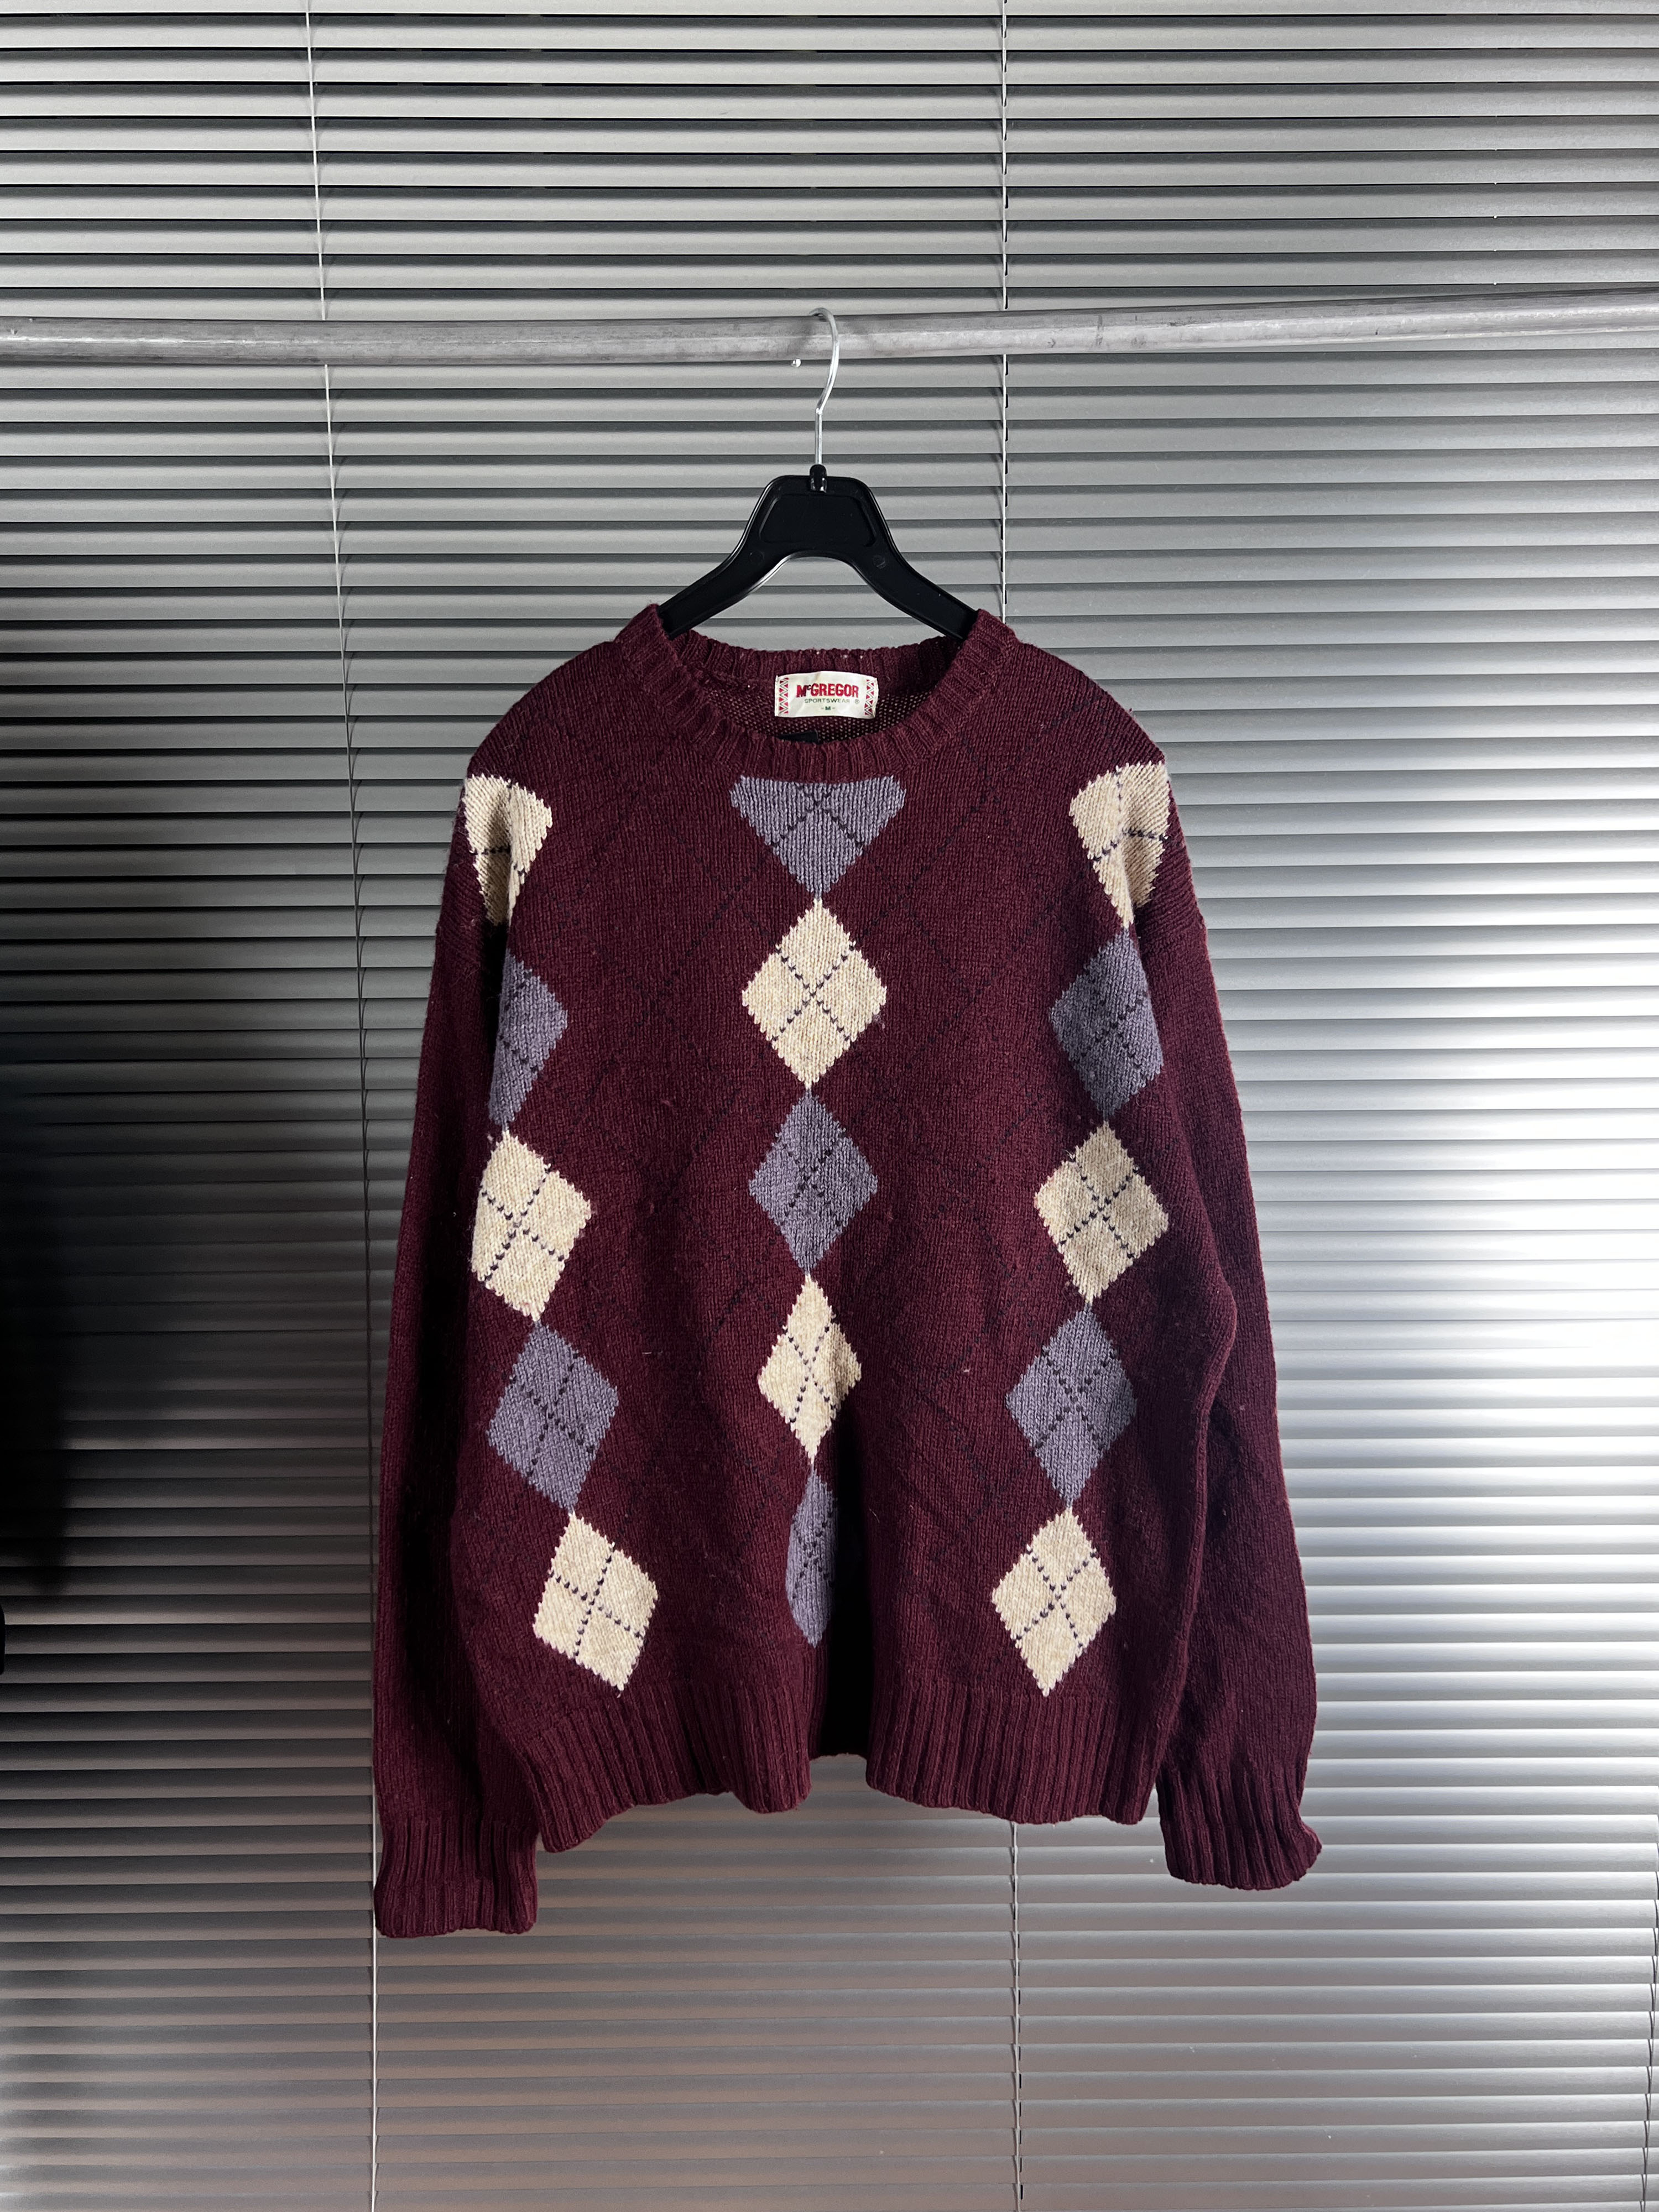 M&#039;CGREGOR argyle knit